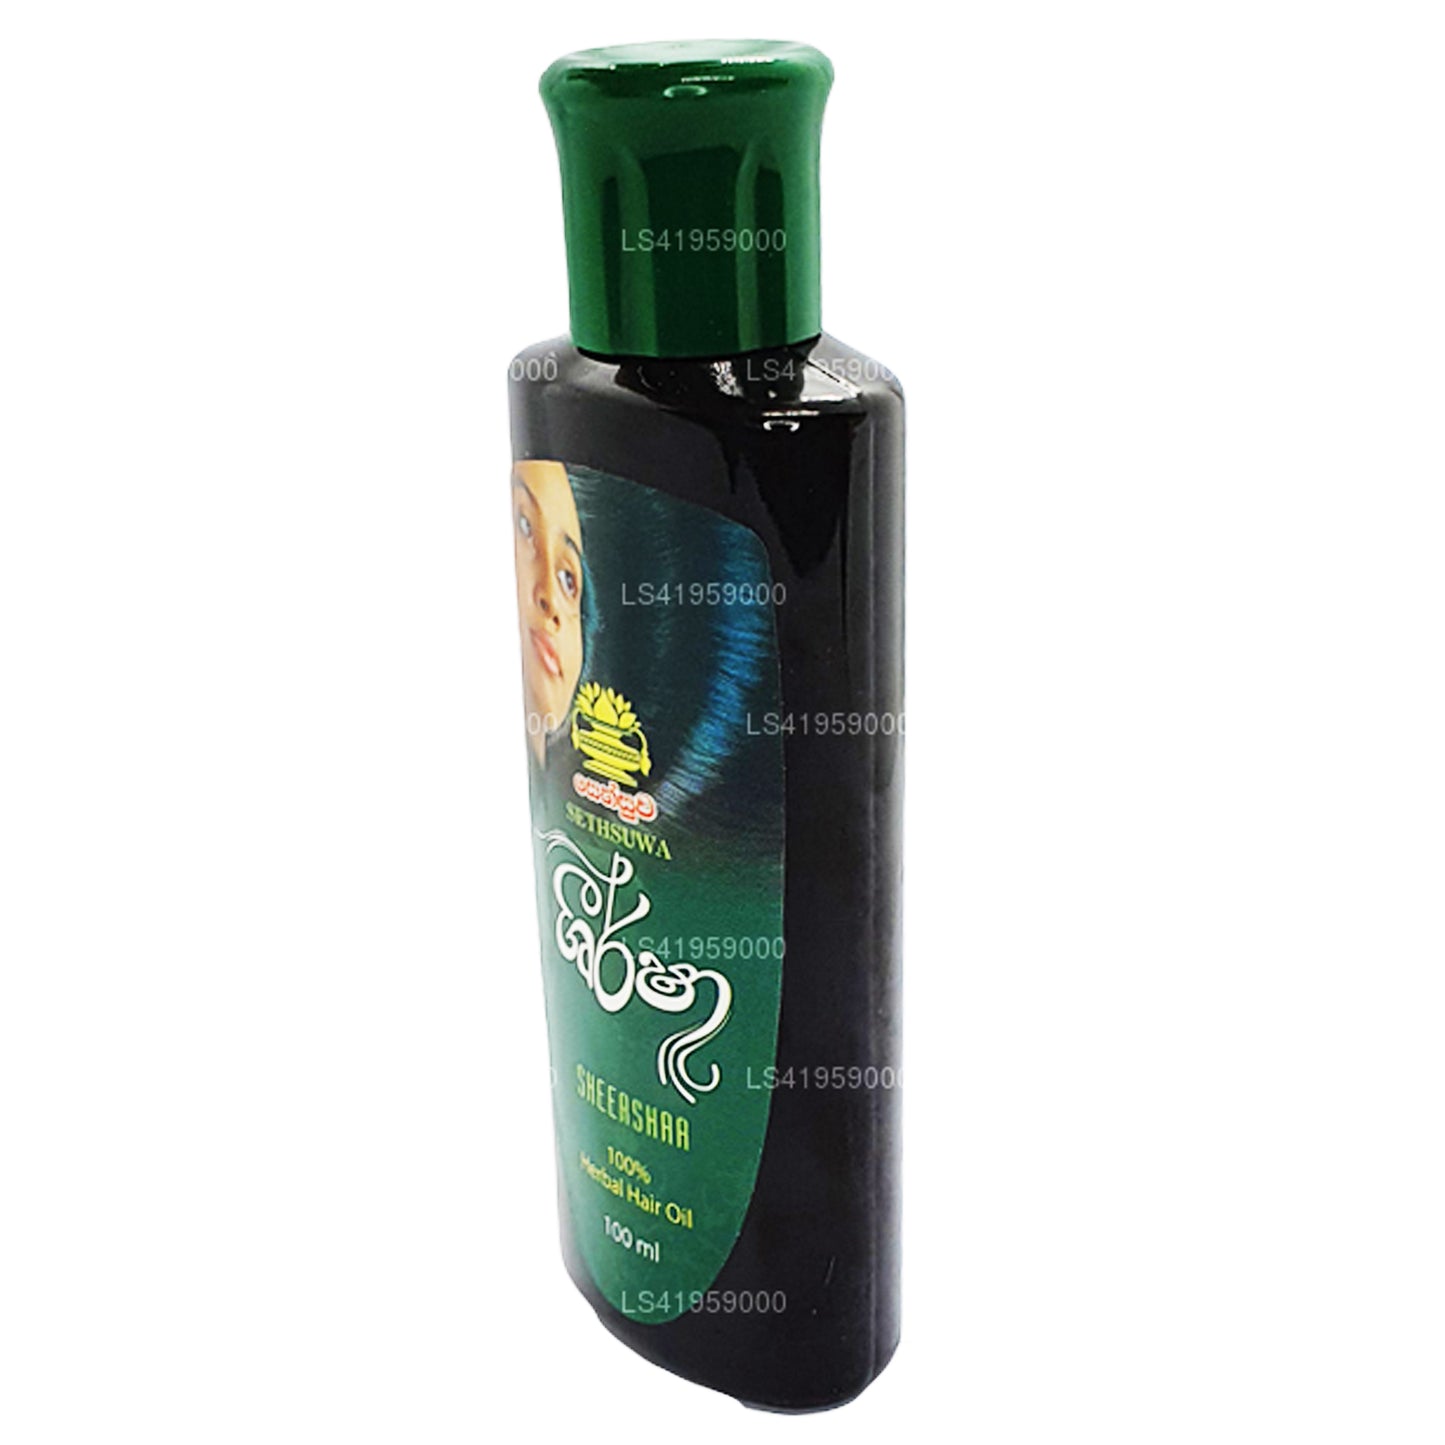 Sethsuwa Sheersha Herbal Hair Oil (100ml)